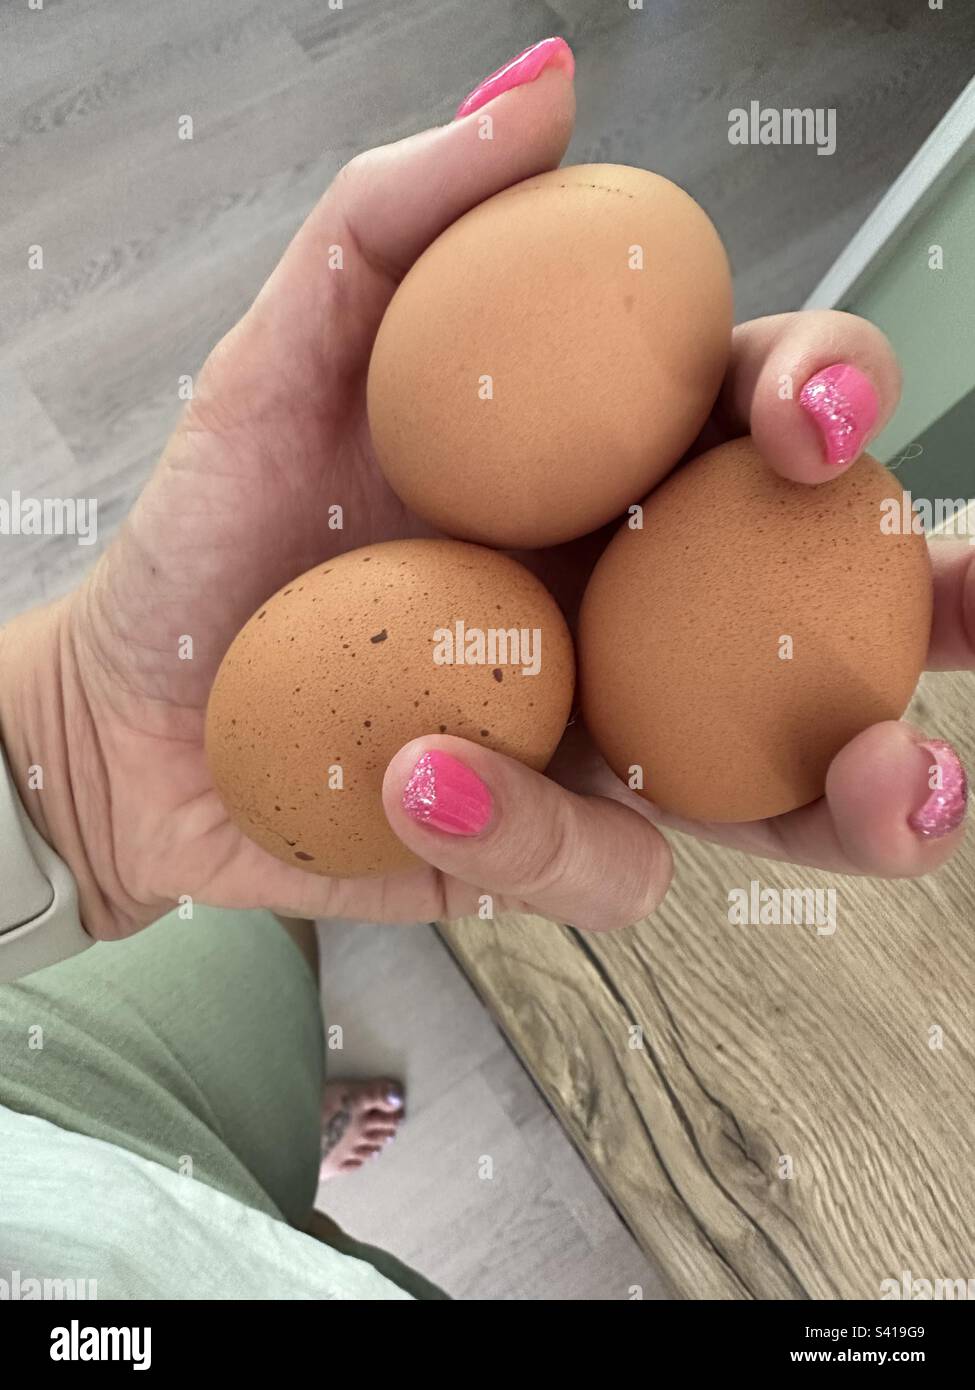 Eggs in hand Stock Photo